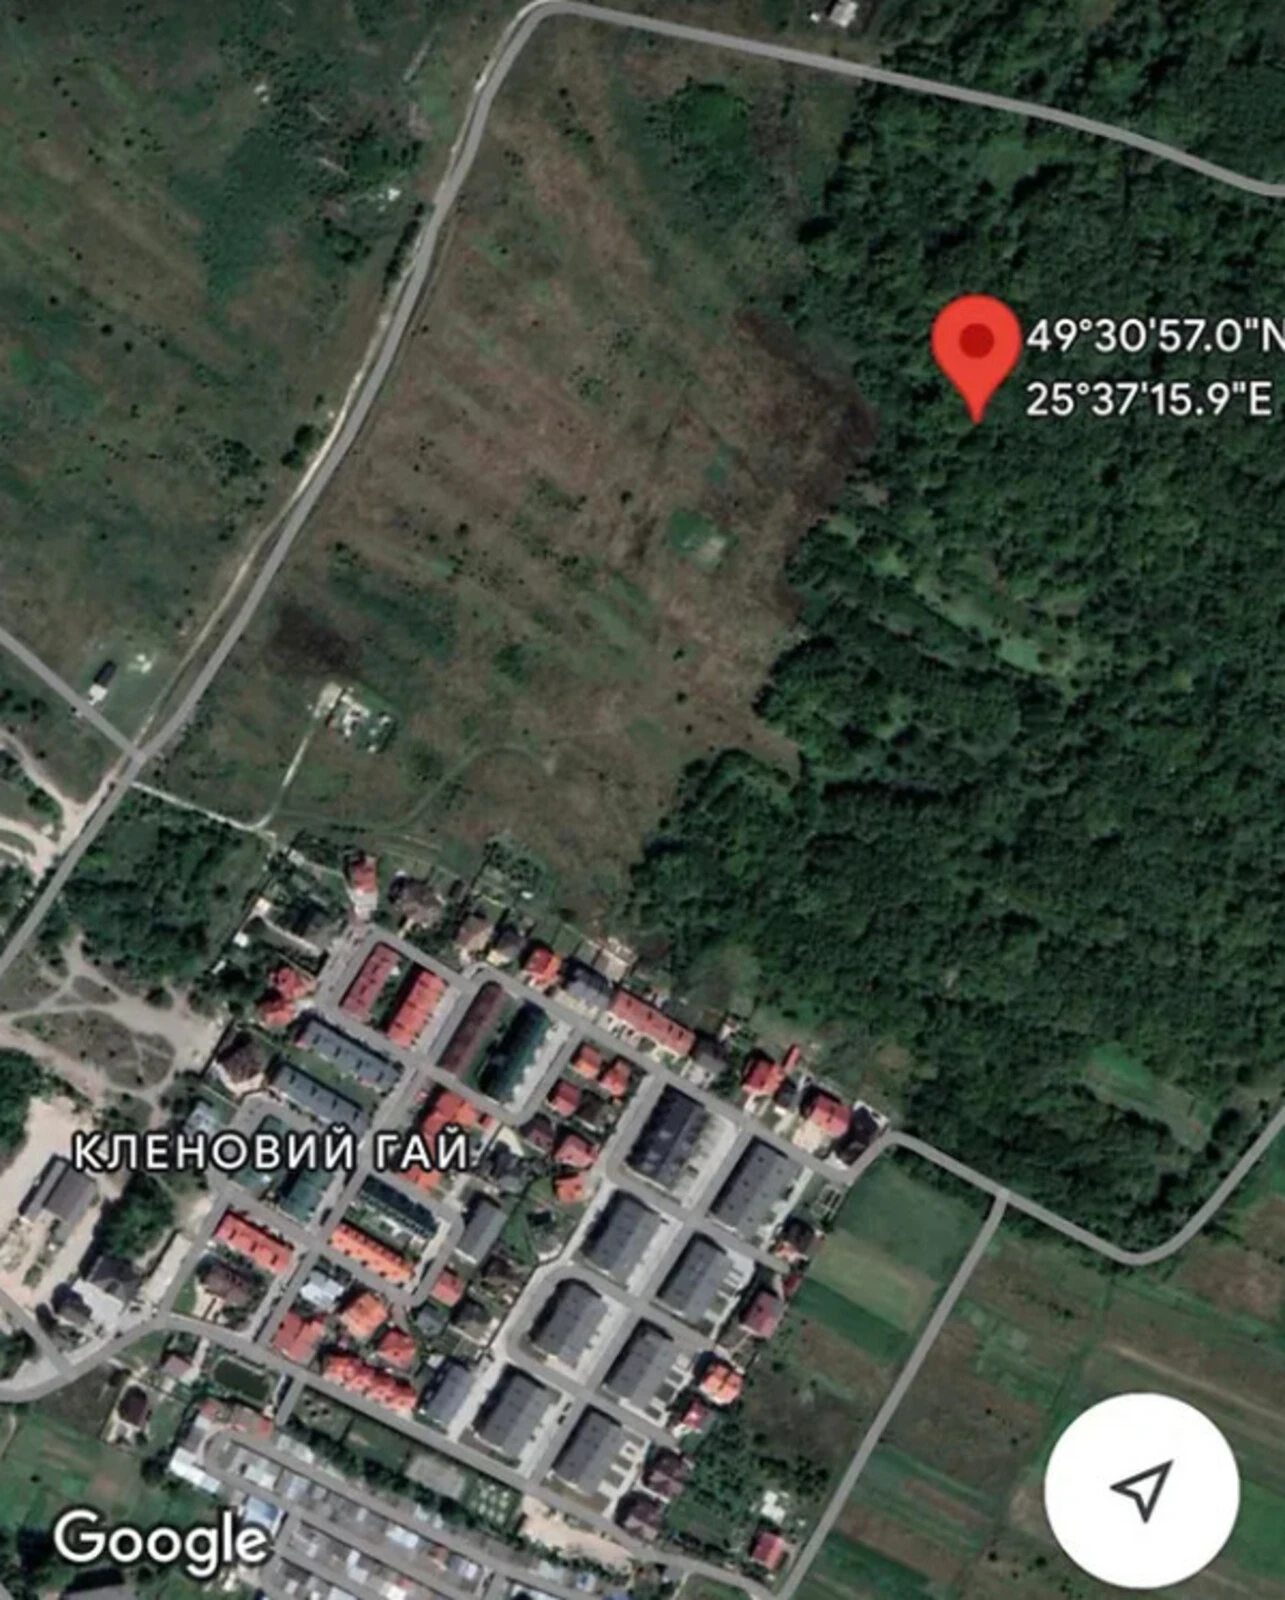 Продаж землі під житлову забудову. Сахарный завод, Тернопіль. 